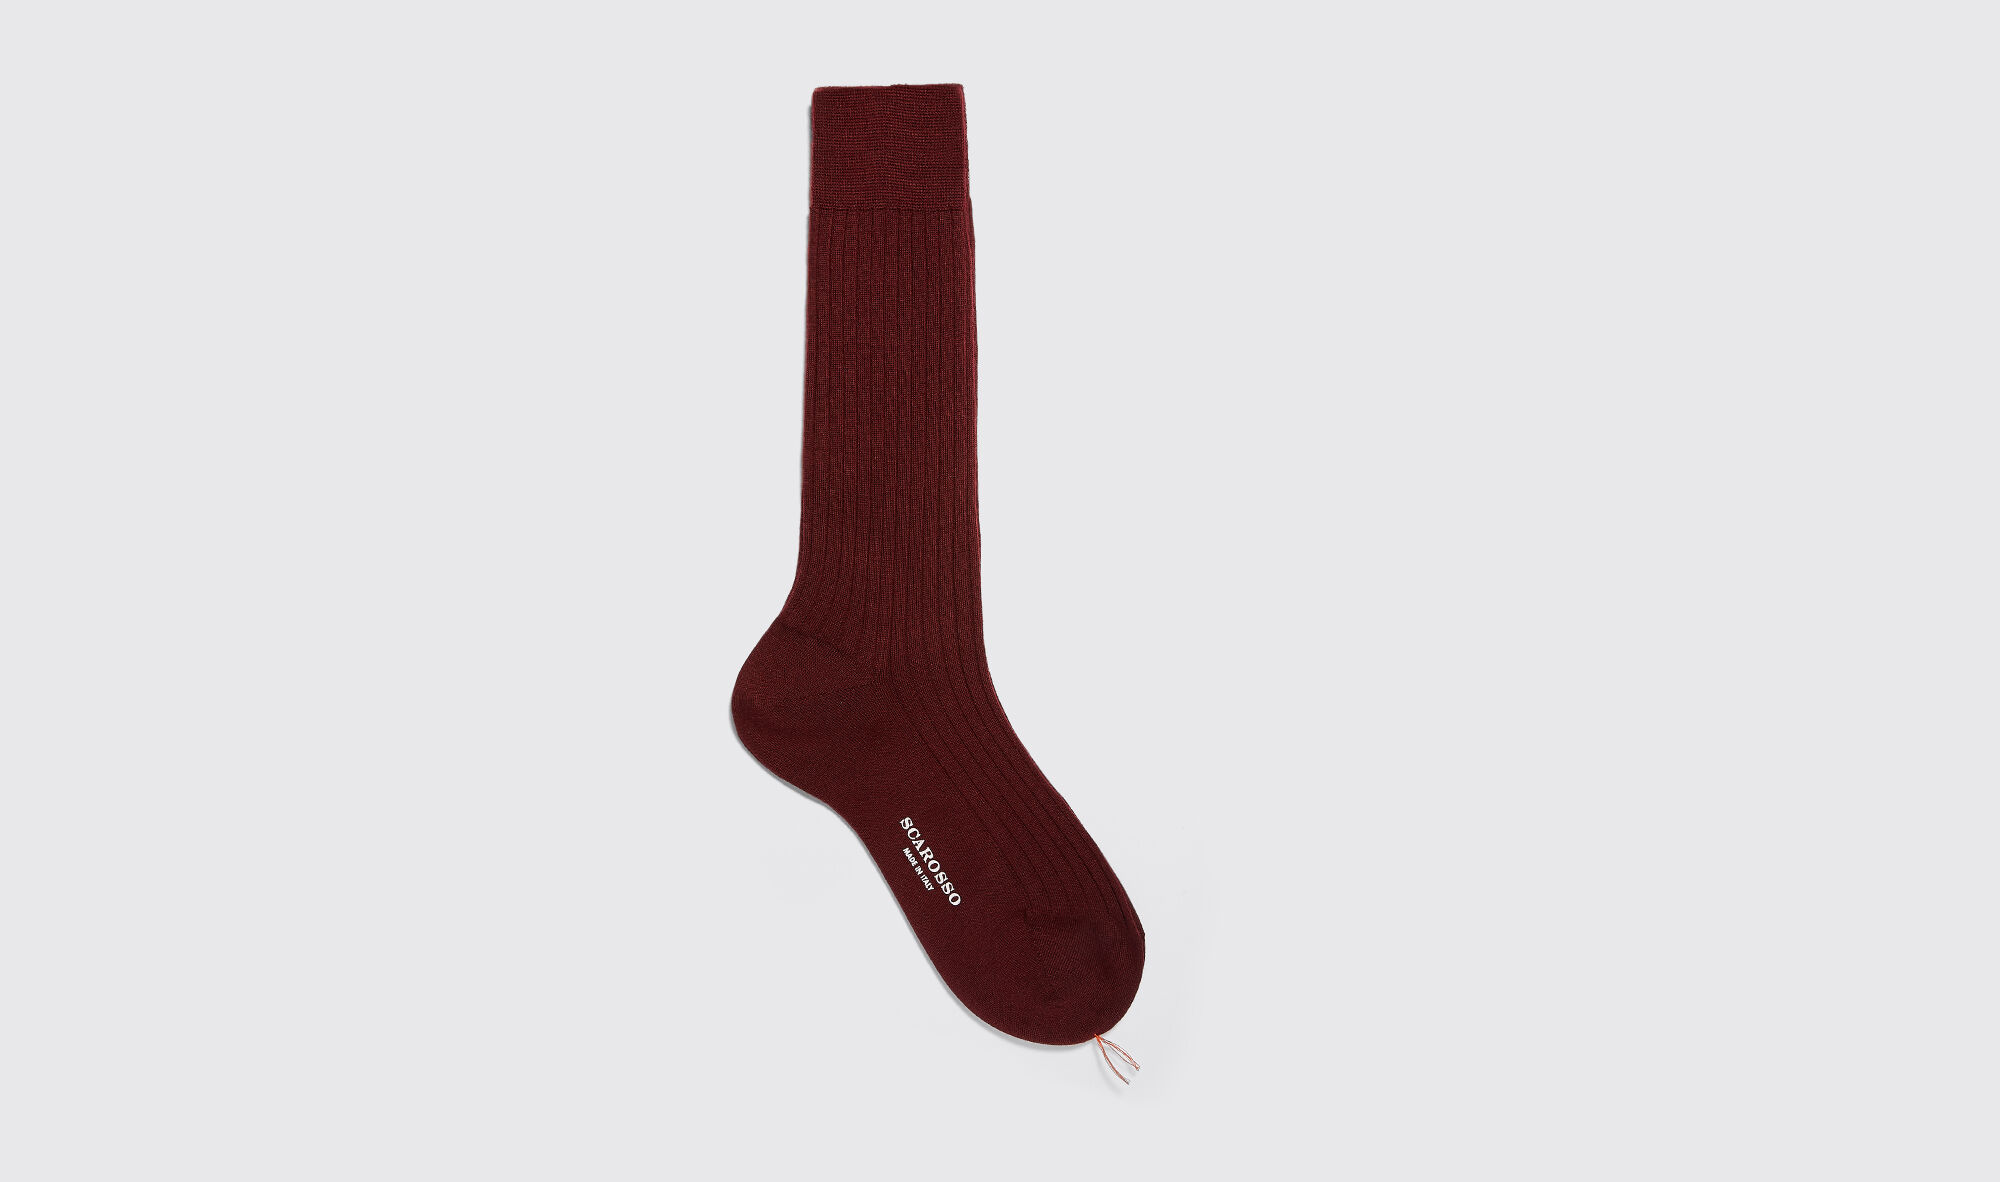 Scarosso Burgundy Wool Calf Socks - Uomo Calze Borgogna - Lana Merino 46-47